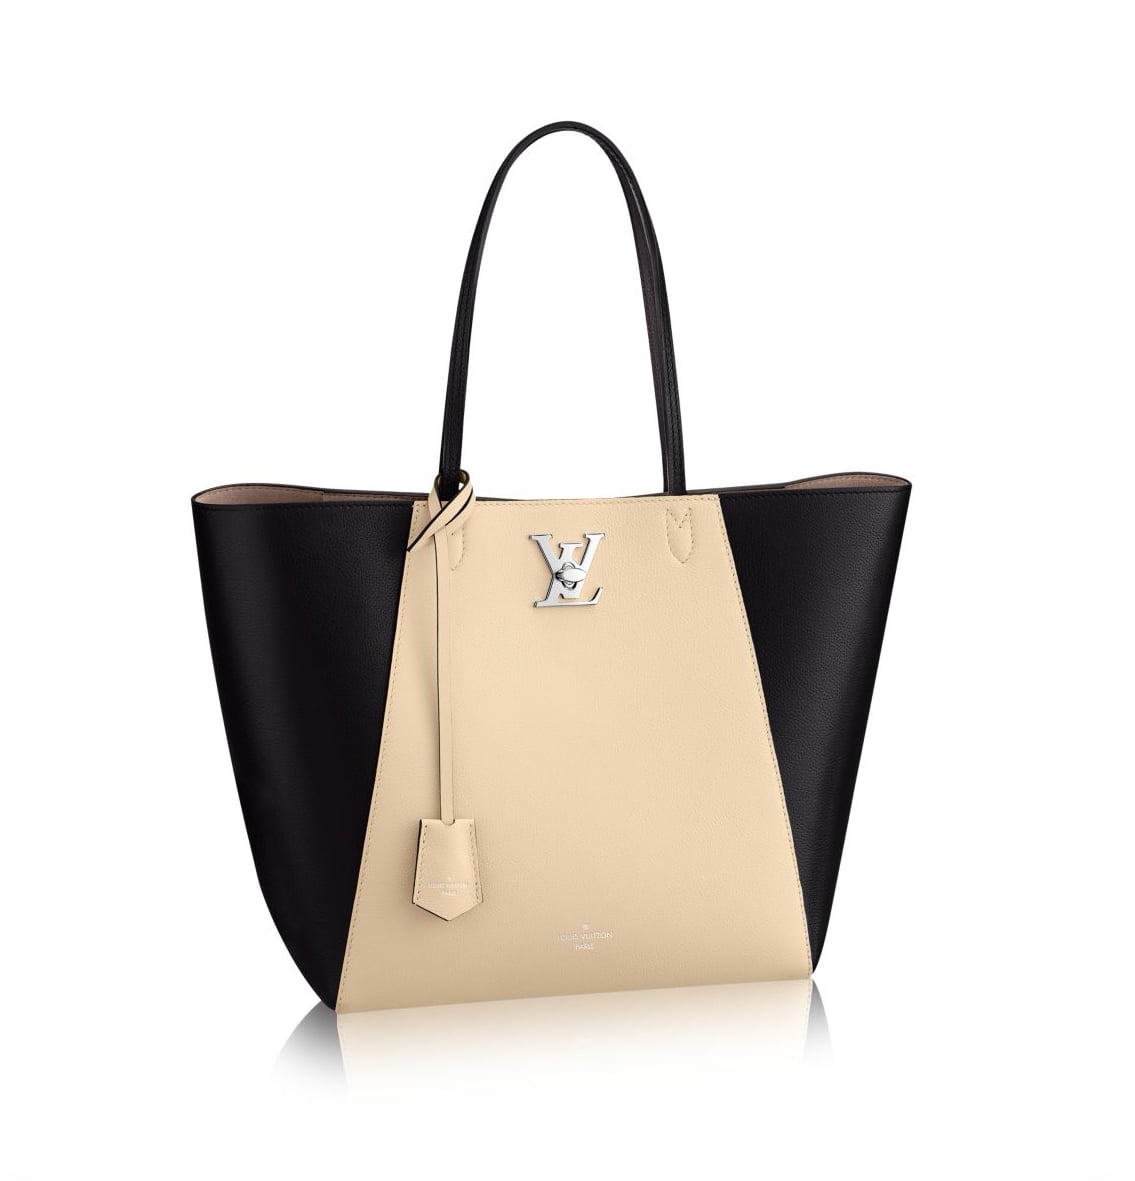 Celebrity Bag: Angelina Jolie's Louis Vuitton Love – The Bag Hag Diaries